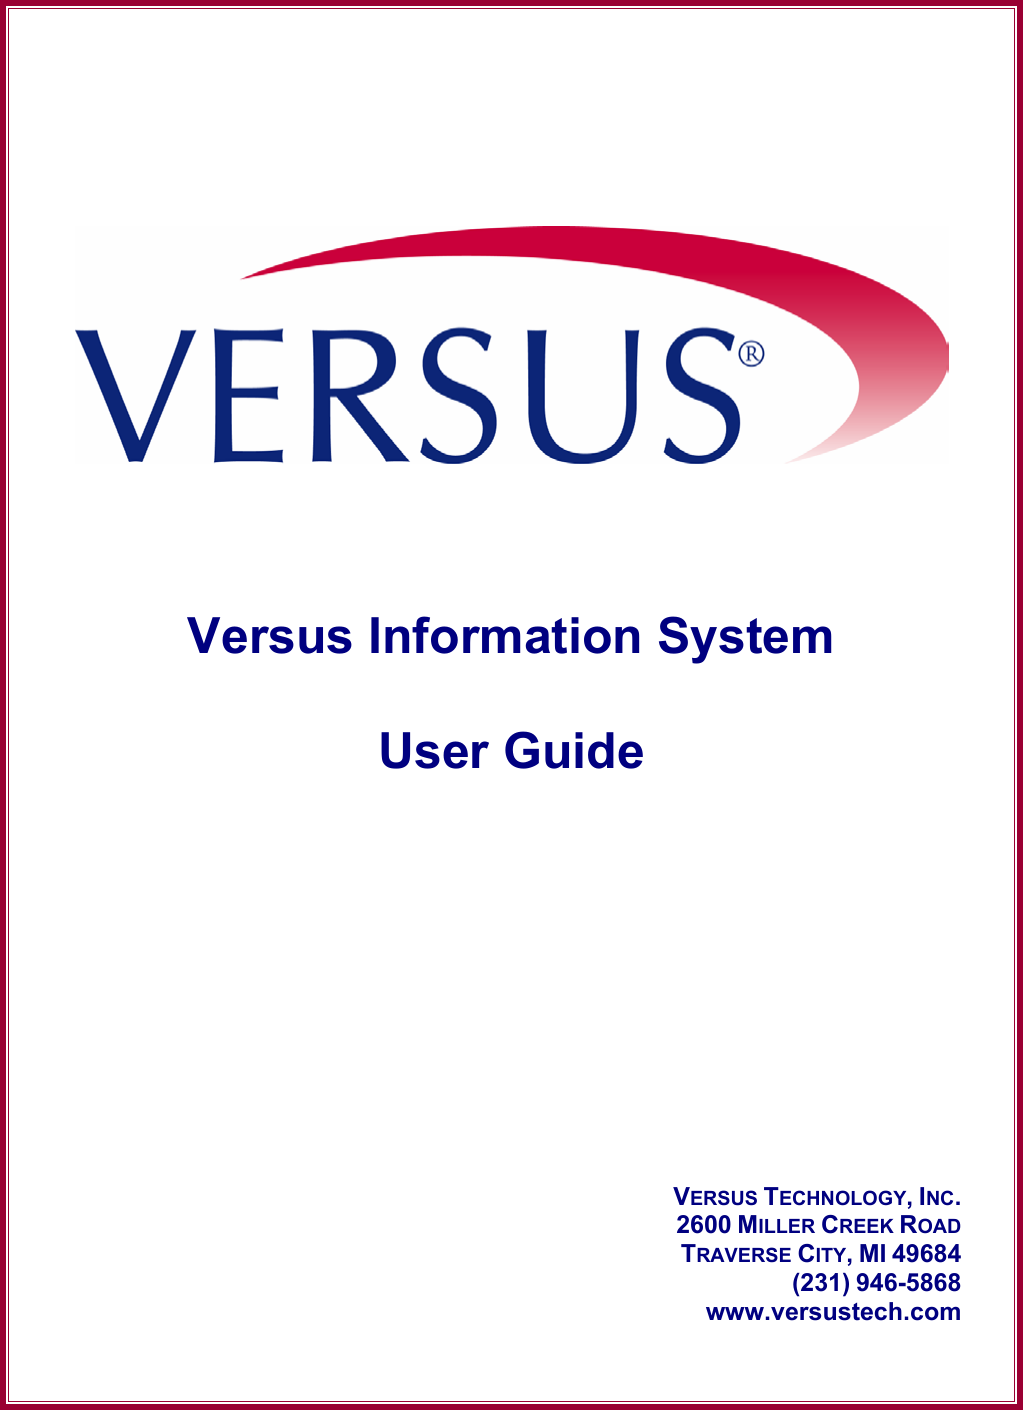             Versus Information System  User Guide              VERSUS TECHNOLOGY, INC. 2600 MILLER CREEK ROAD TRAVERSE CITY, MI 49684 (231) 946-5868 www.versustech.com